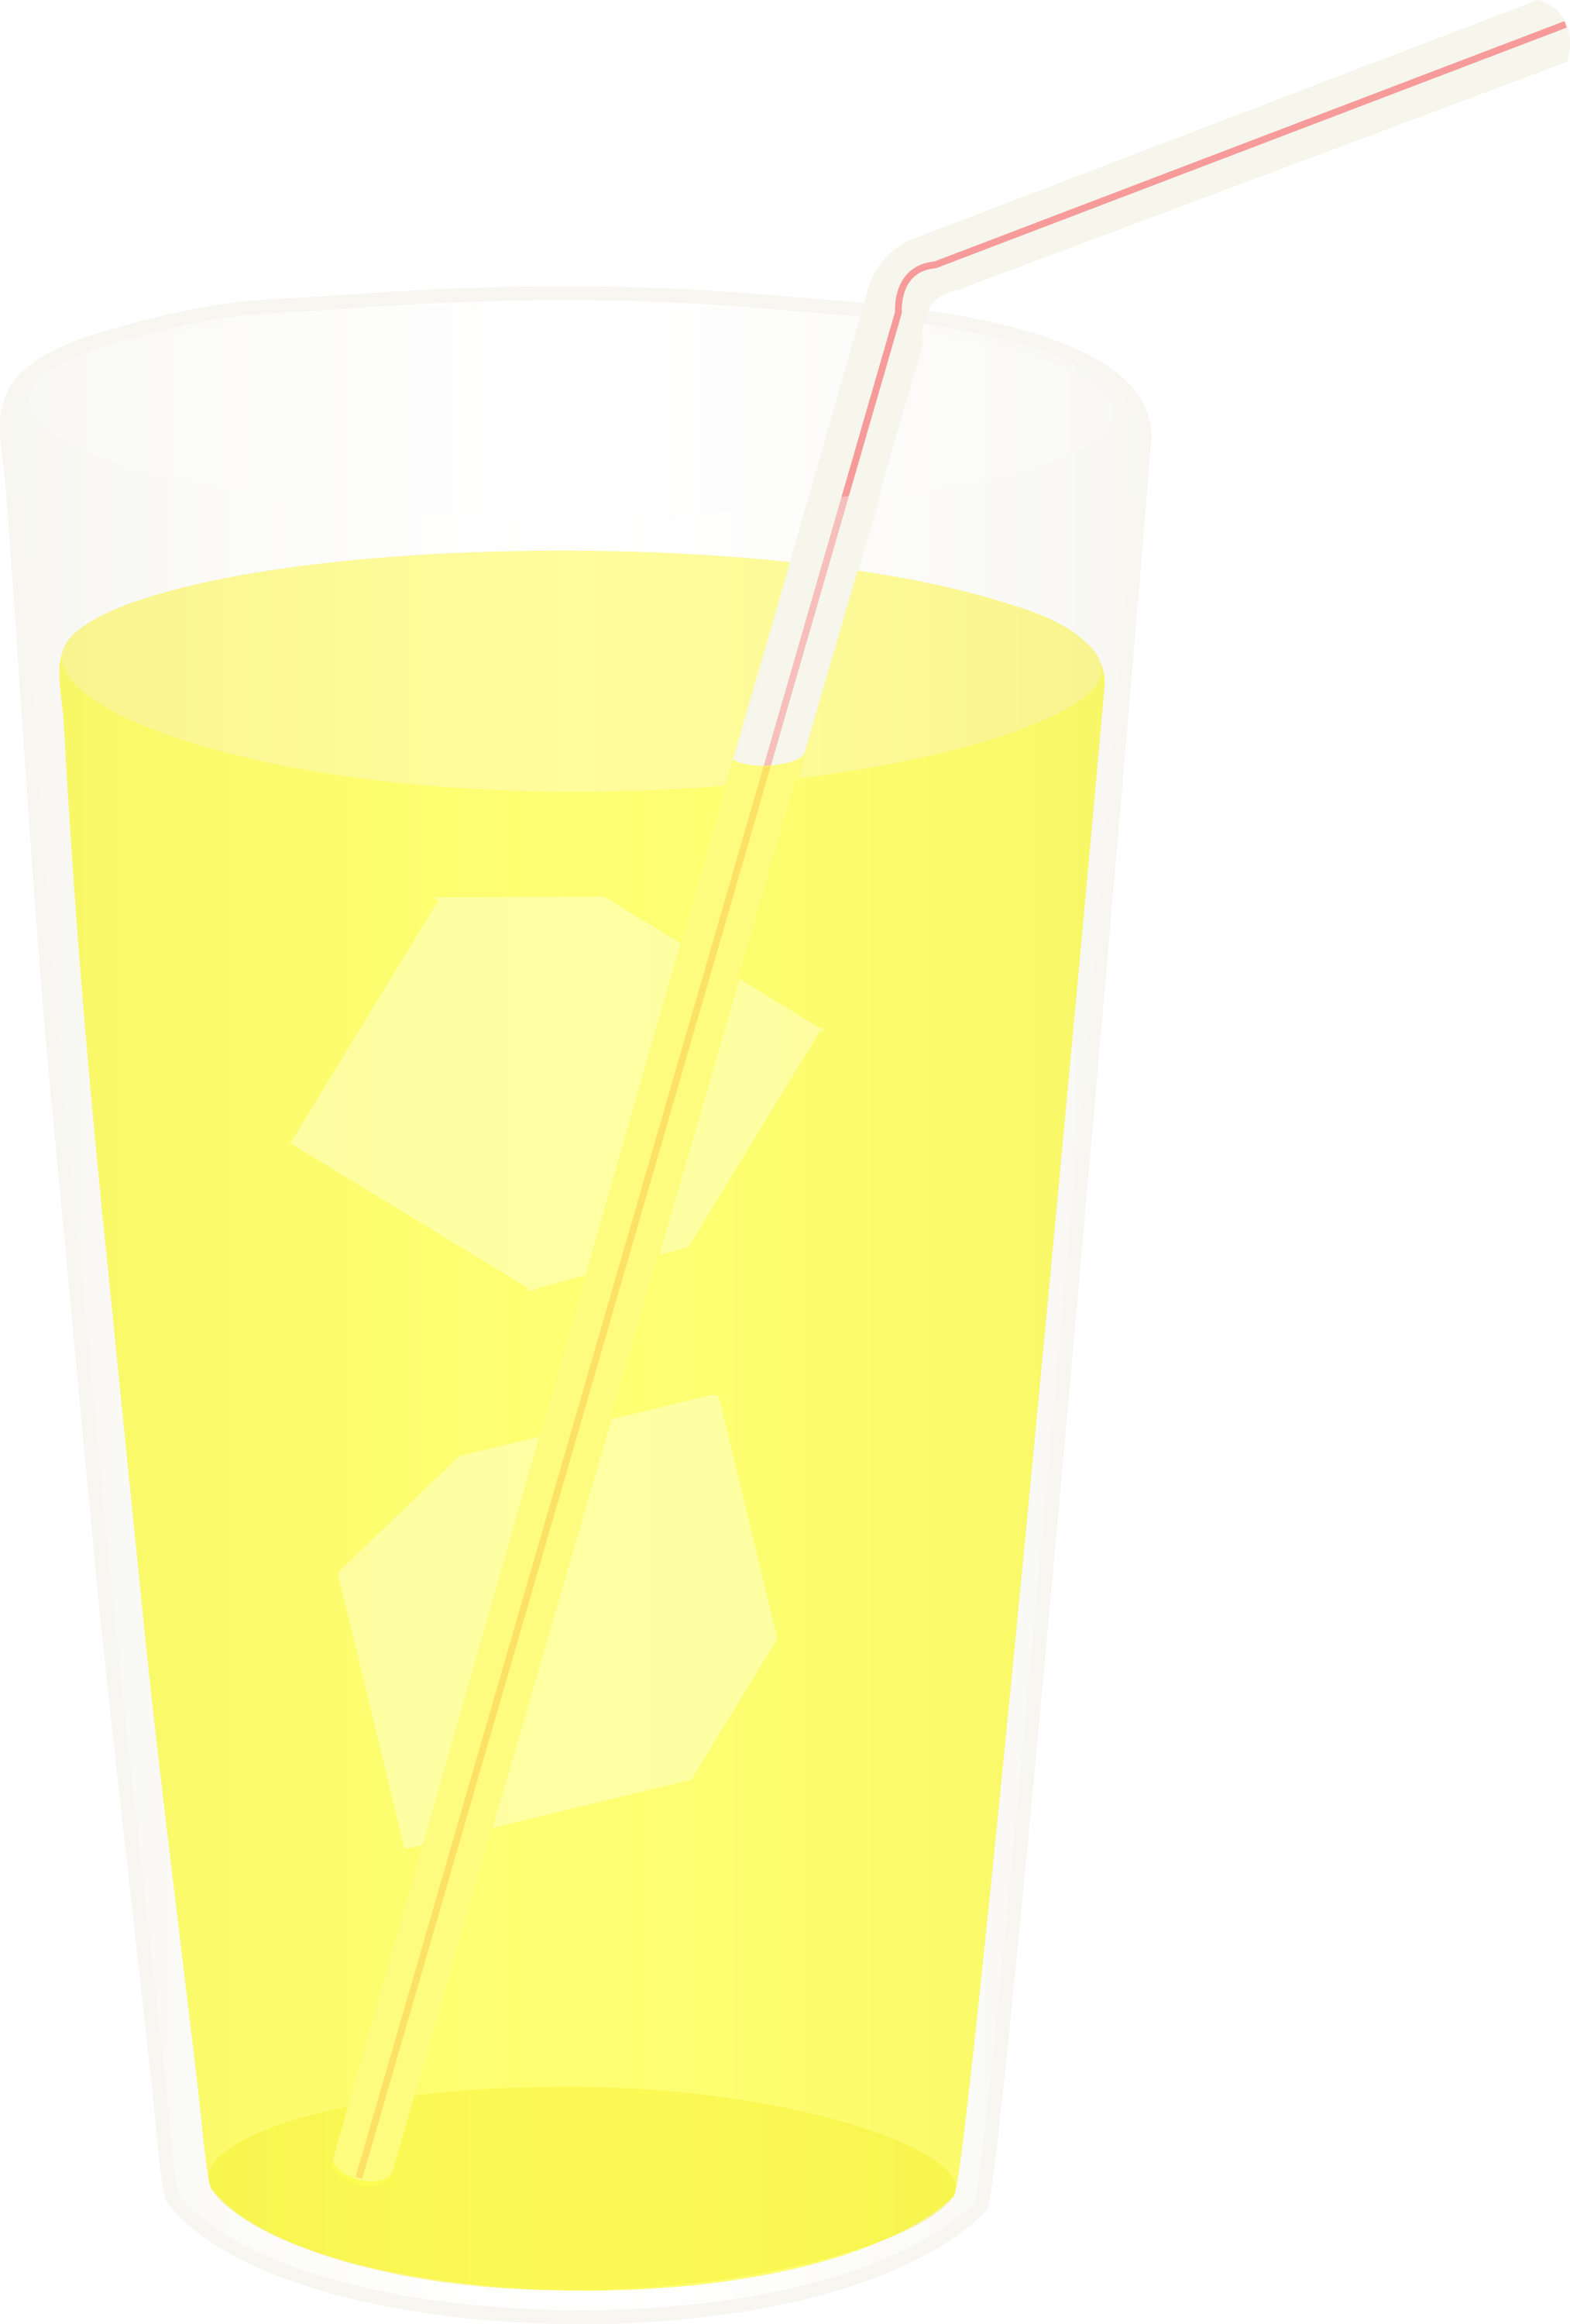 clipart glass of lemonade - photo #14